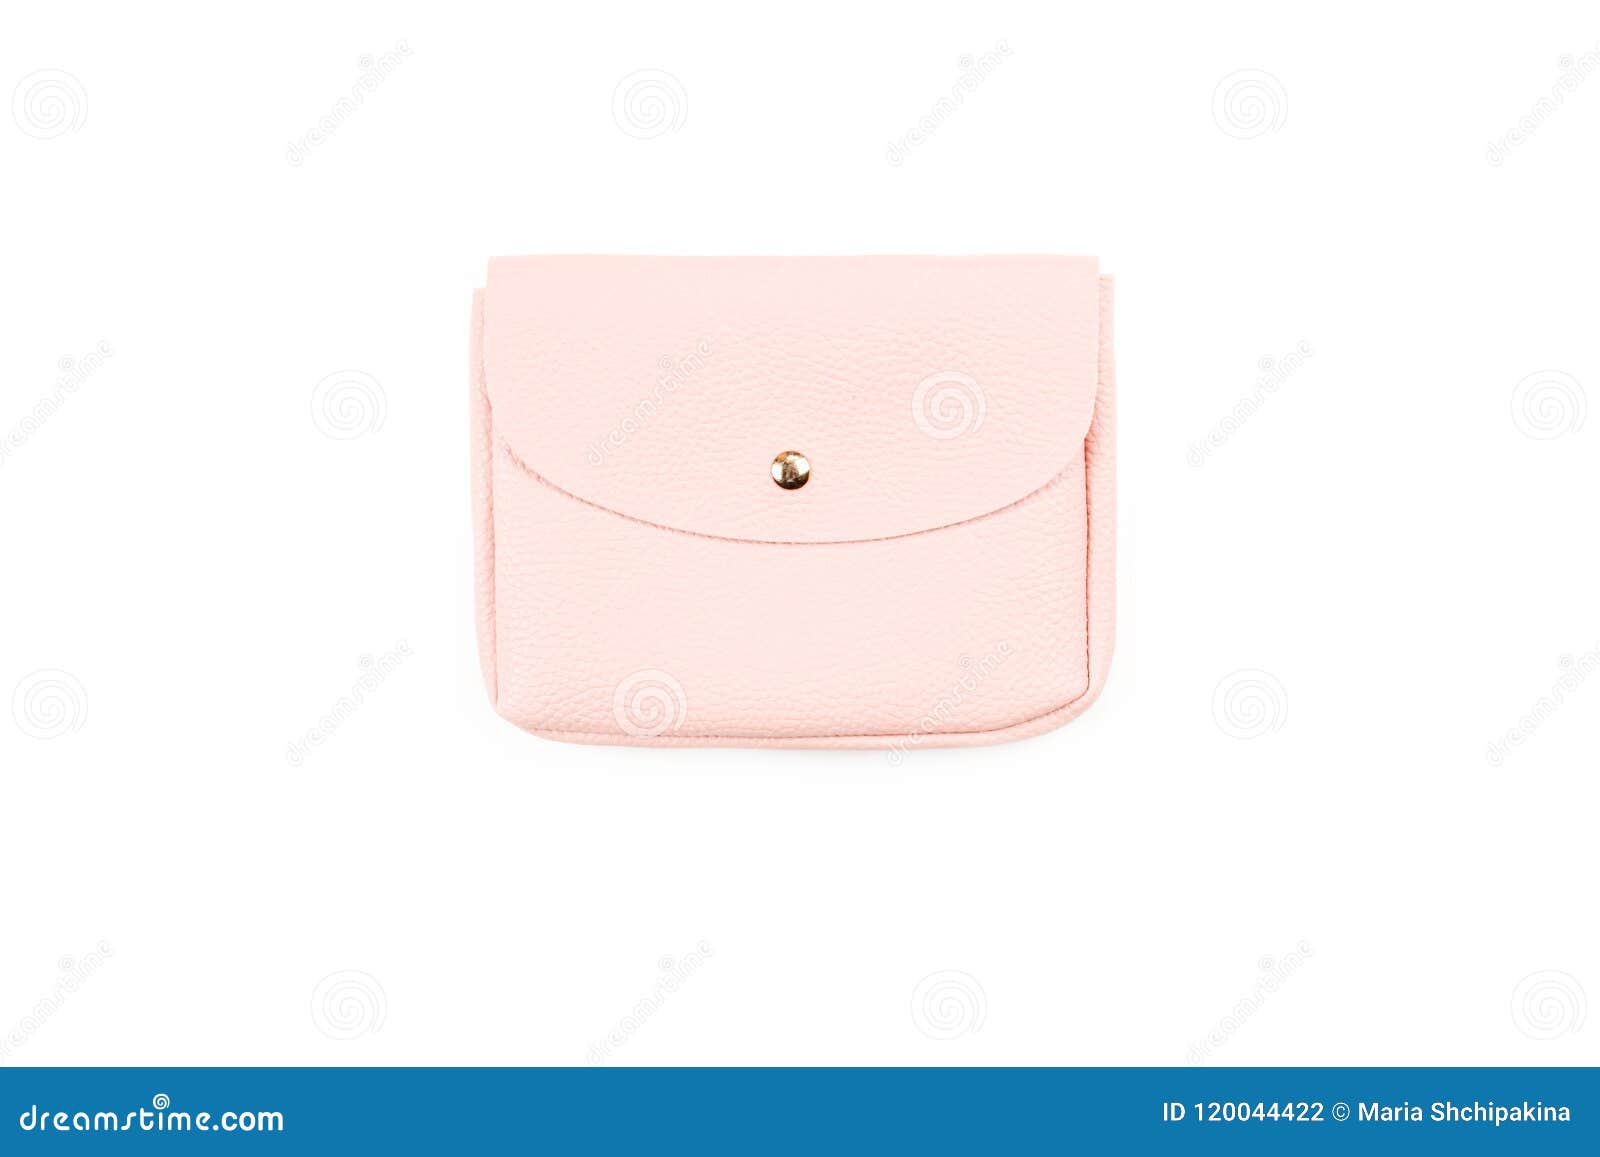 Pink Purse Close Up on White Background. Stock Photo - Image of style ...